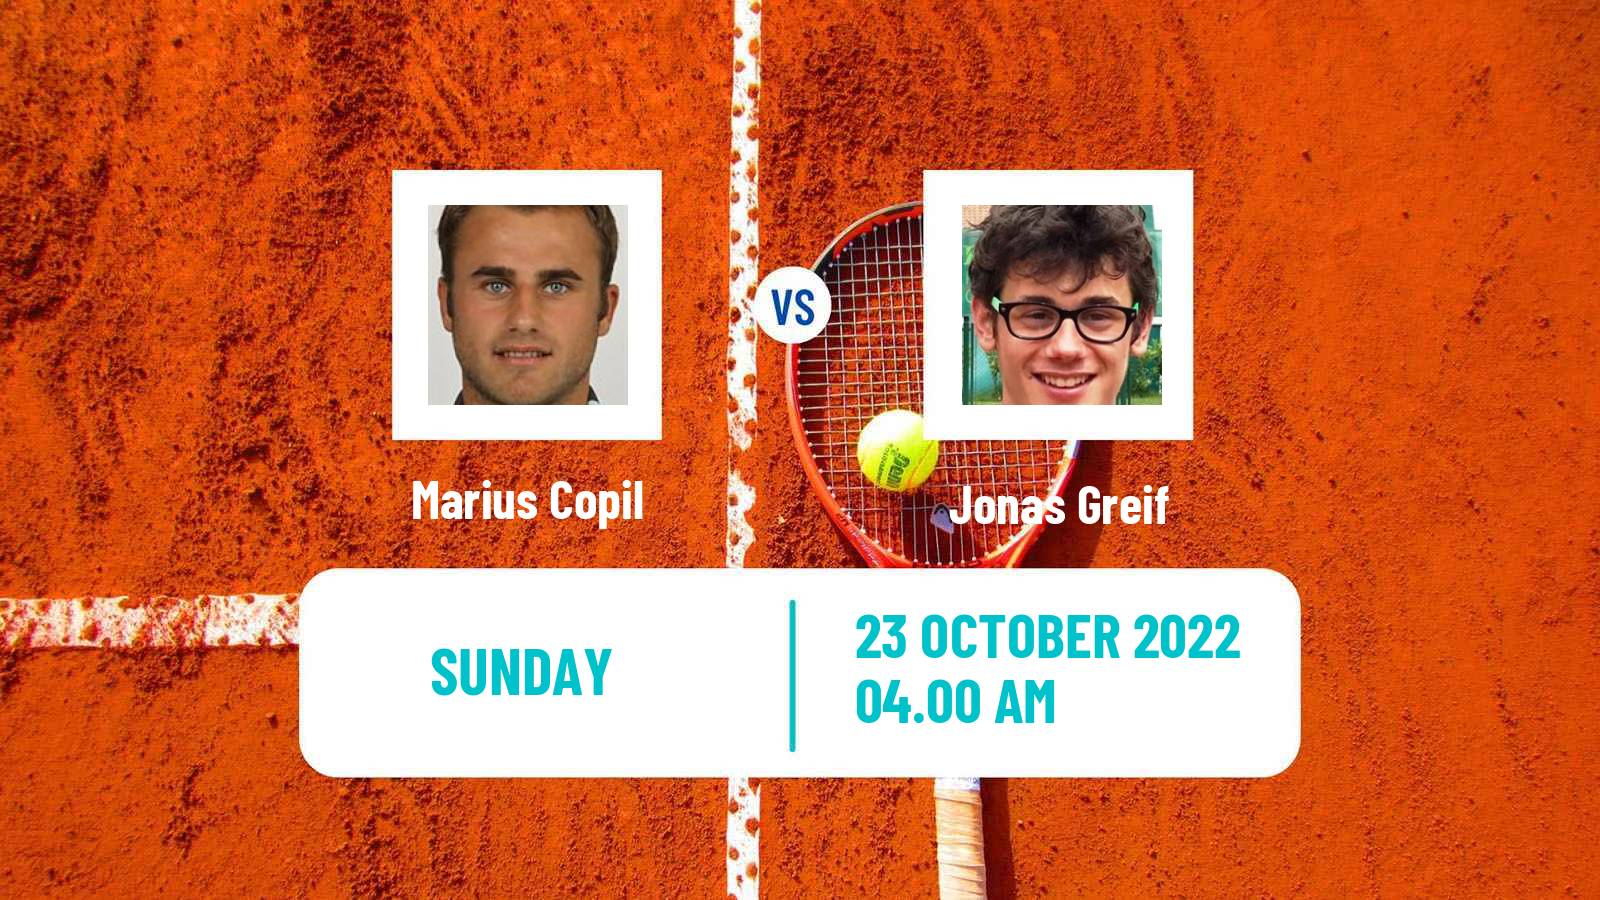 Tennis ATP Challenger Marius Copil - Jonas Greif